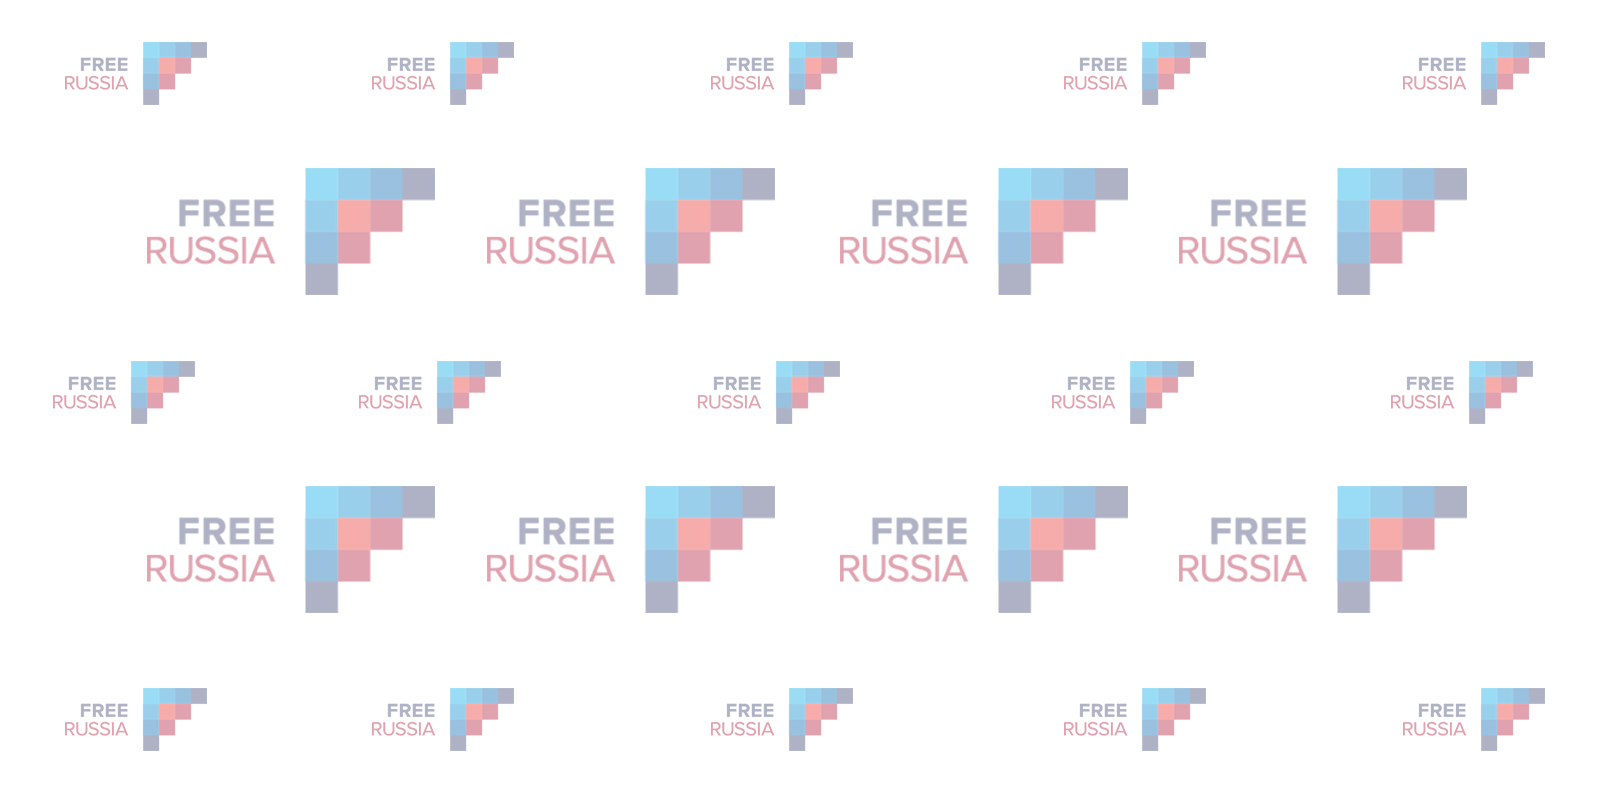 Free Russia - 2015